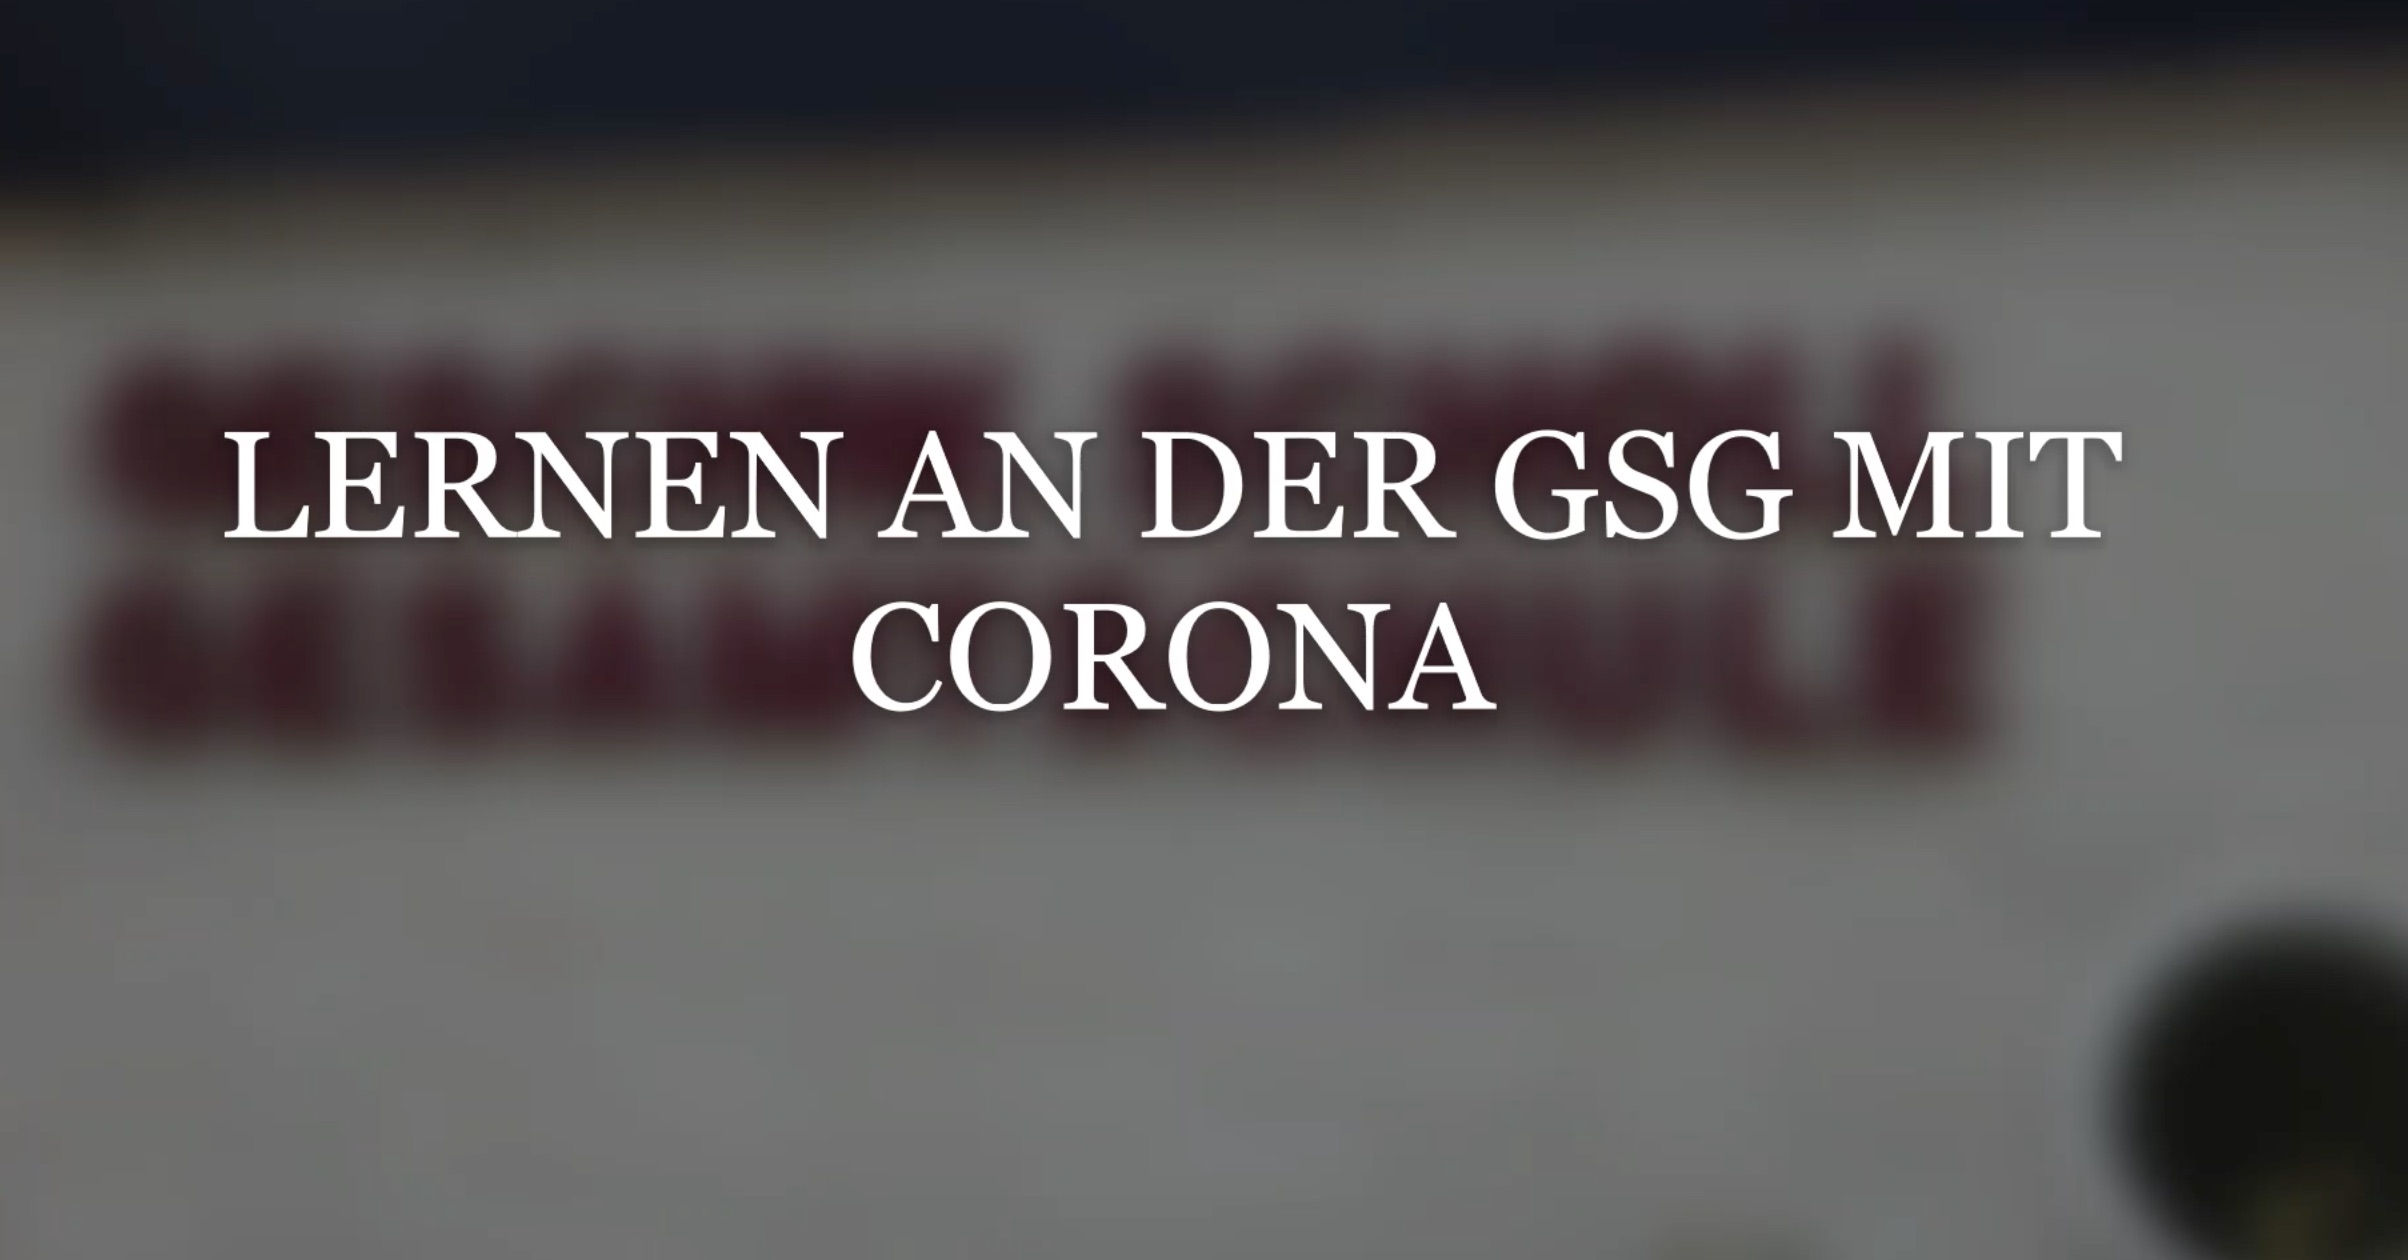 Lernen an der GSG mit Corna